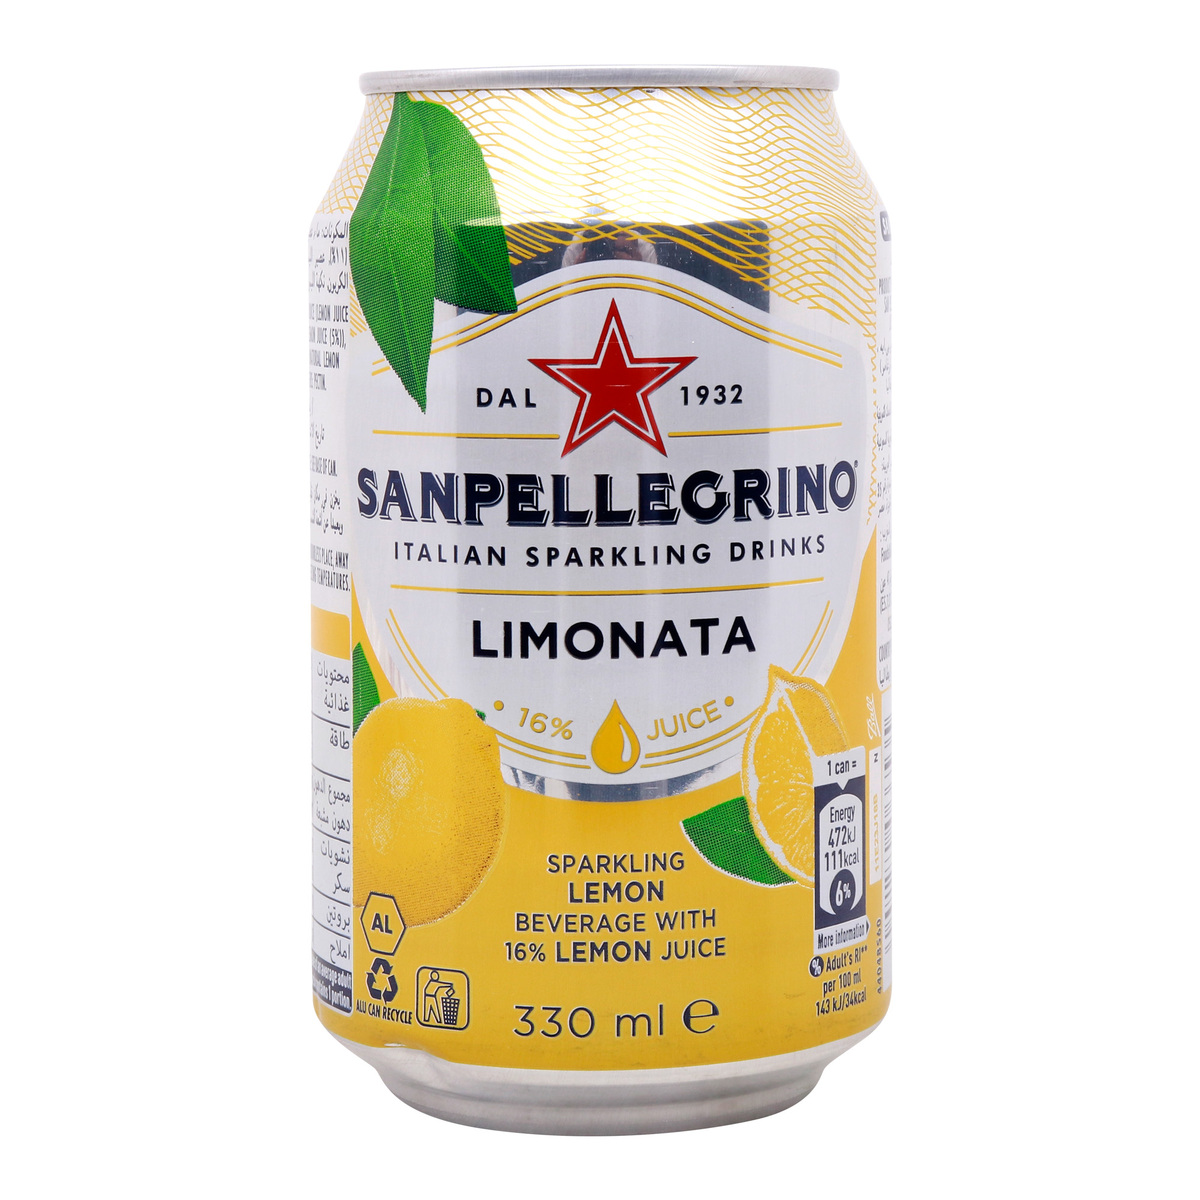 San Pellegrino Limonata Italian Sparkling Drinks 6 x 330 ml